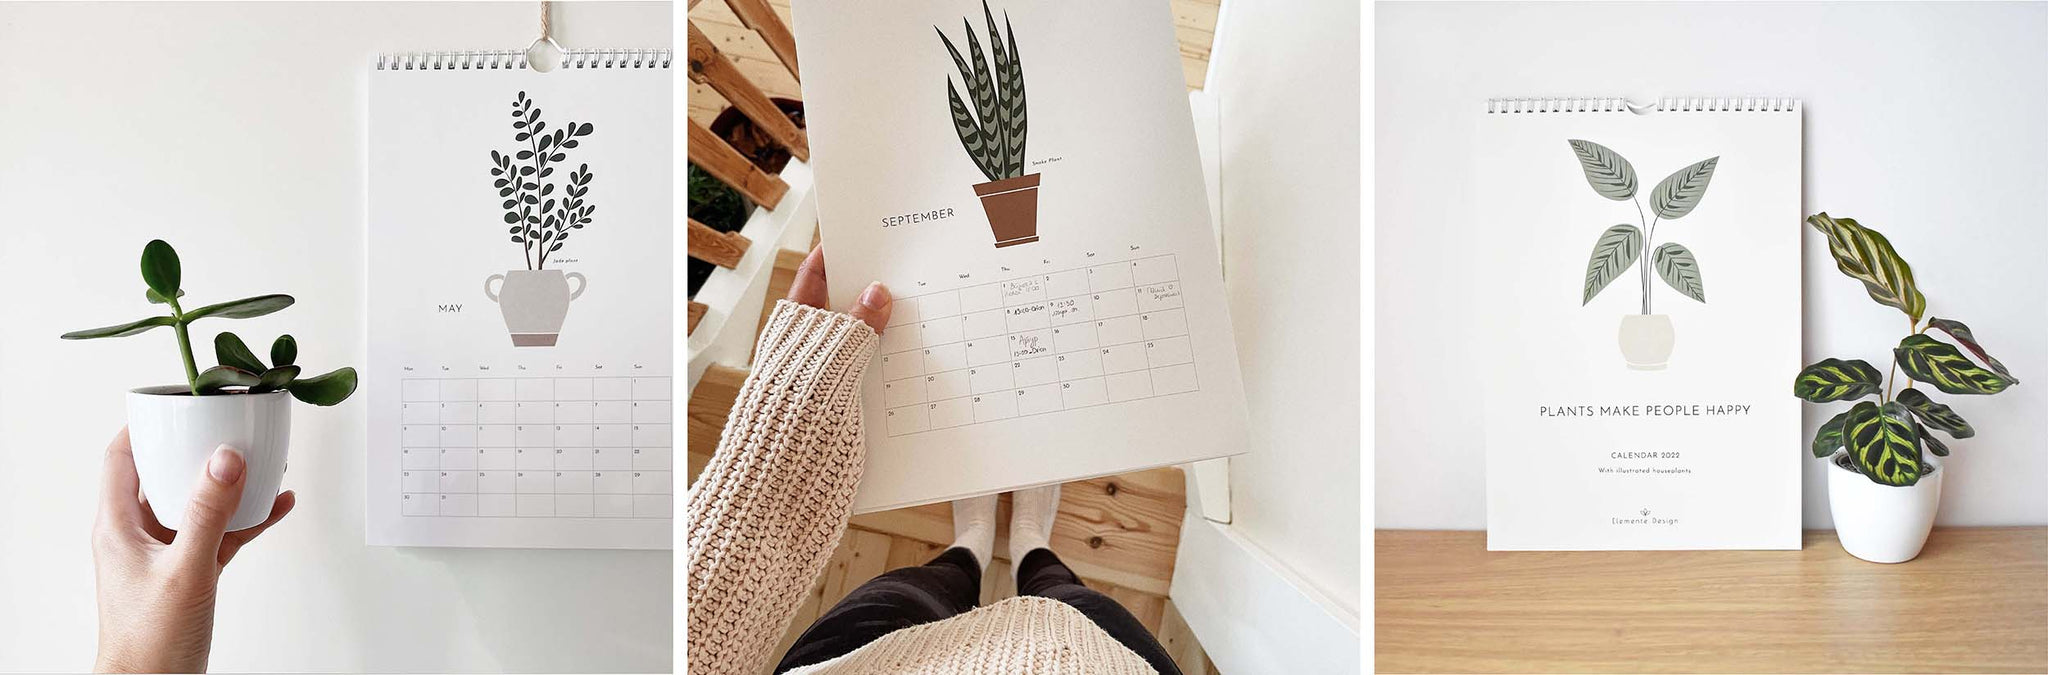 illustrated calendar plants make people happy Elemente Design 